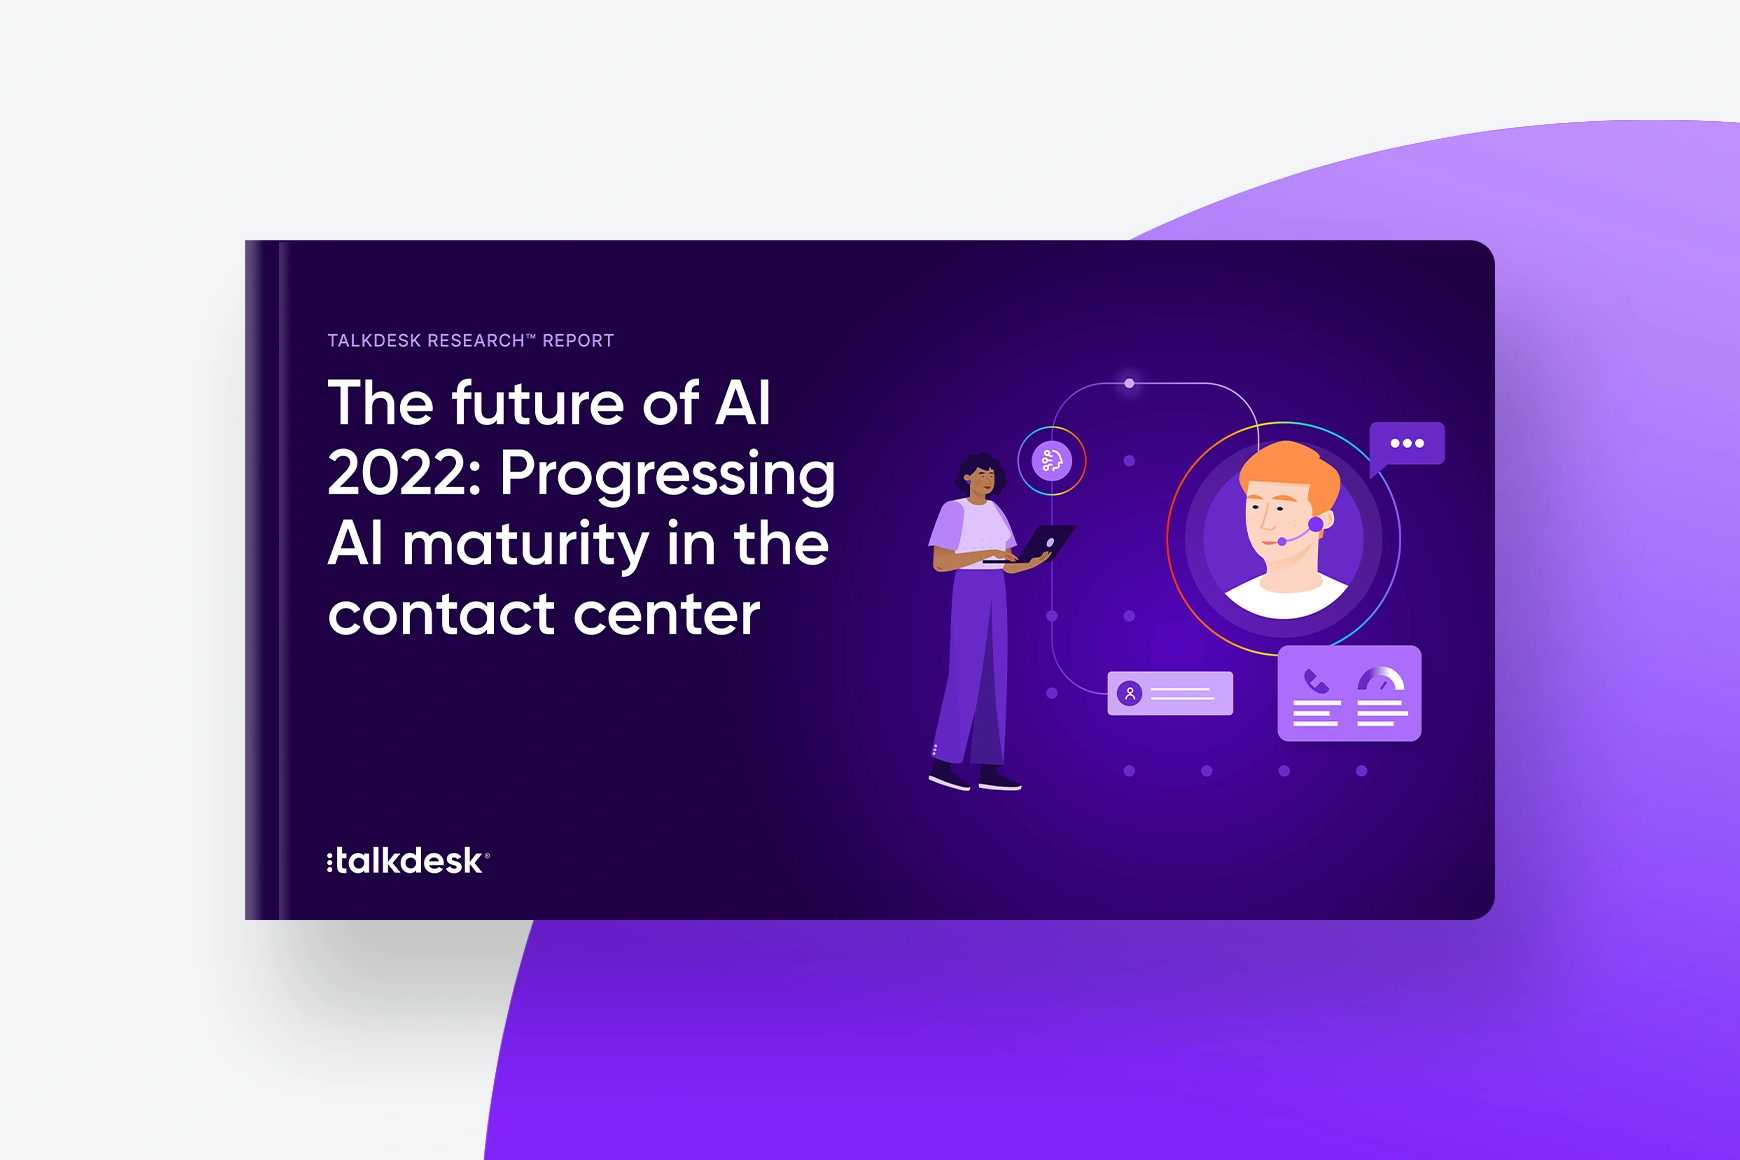 The future of AI 2022: Progressing AI maturity in the contact center